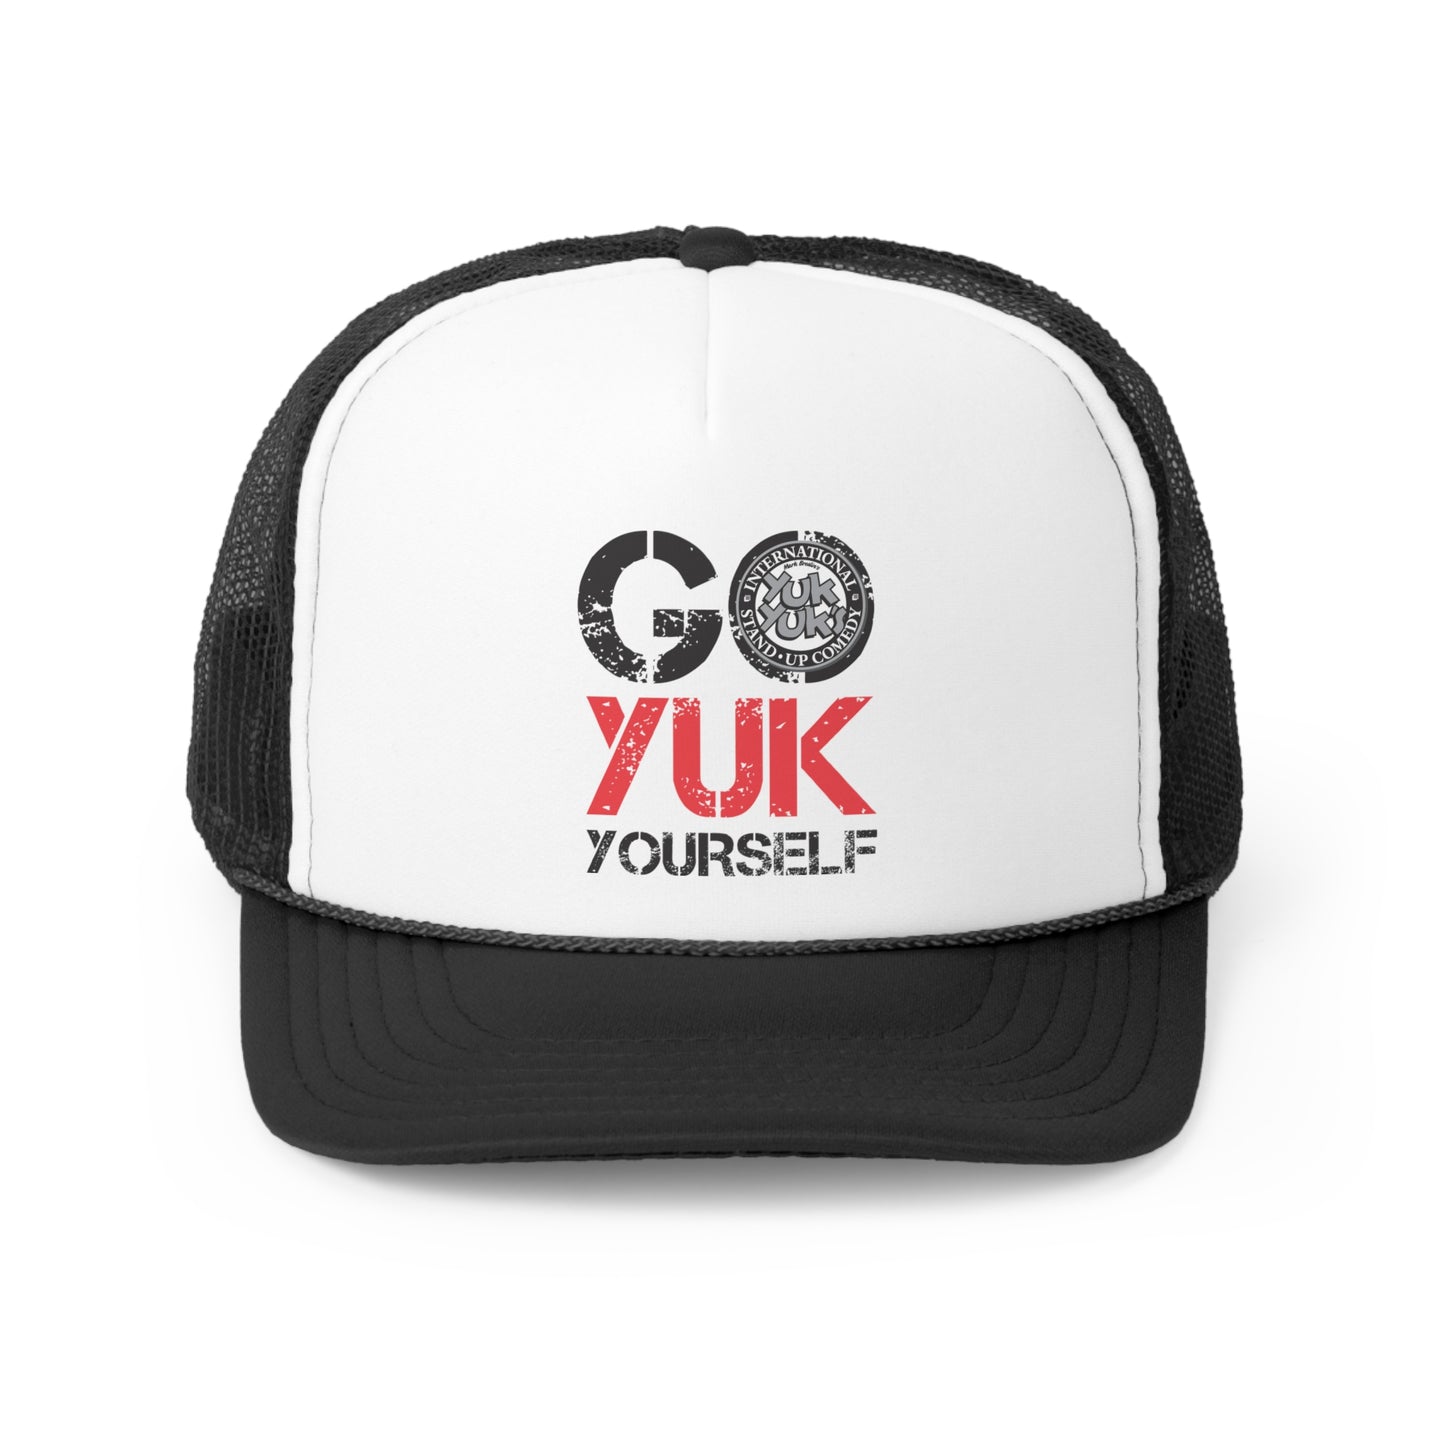 Go Yuk Yourself Trucker Caps